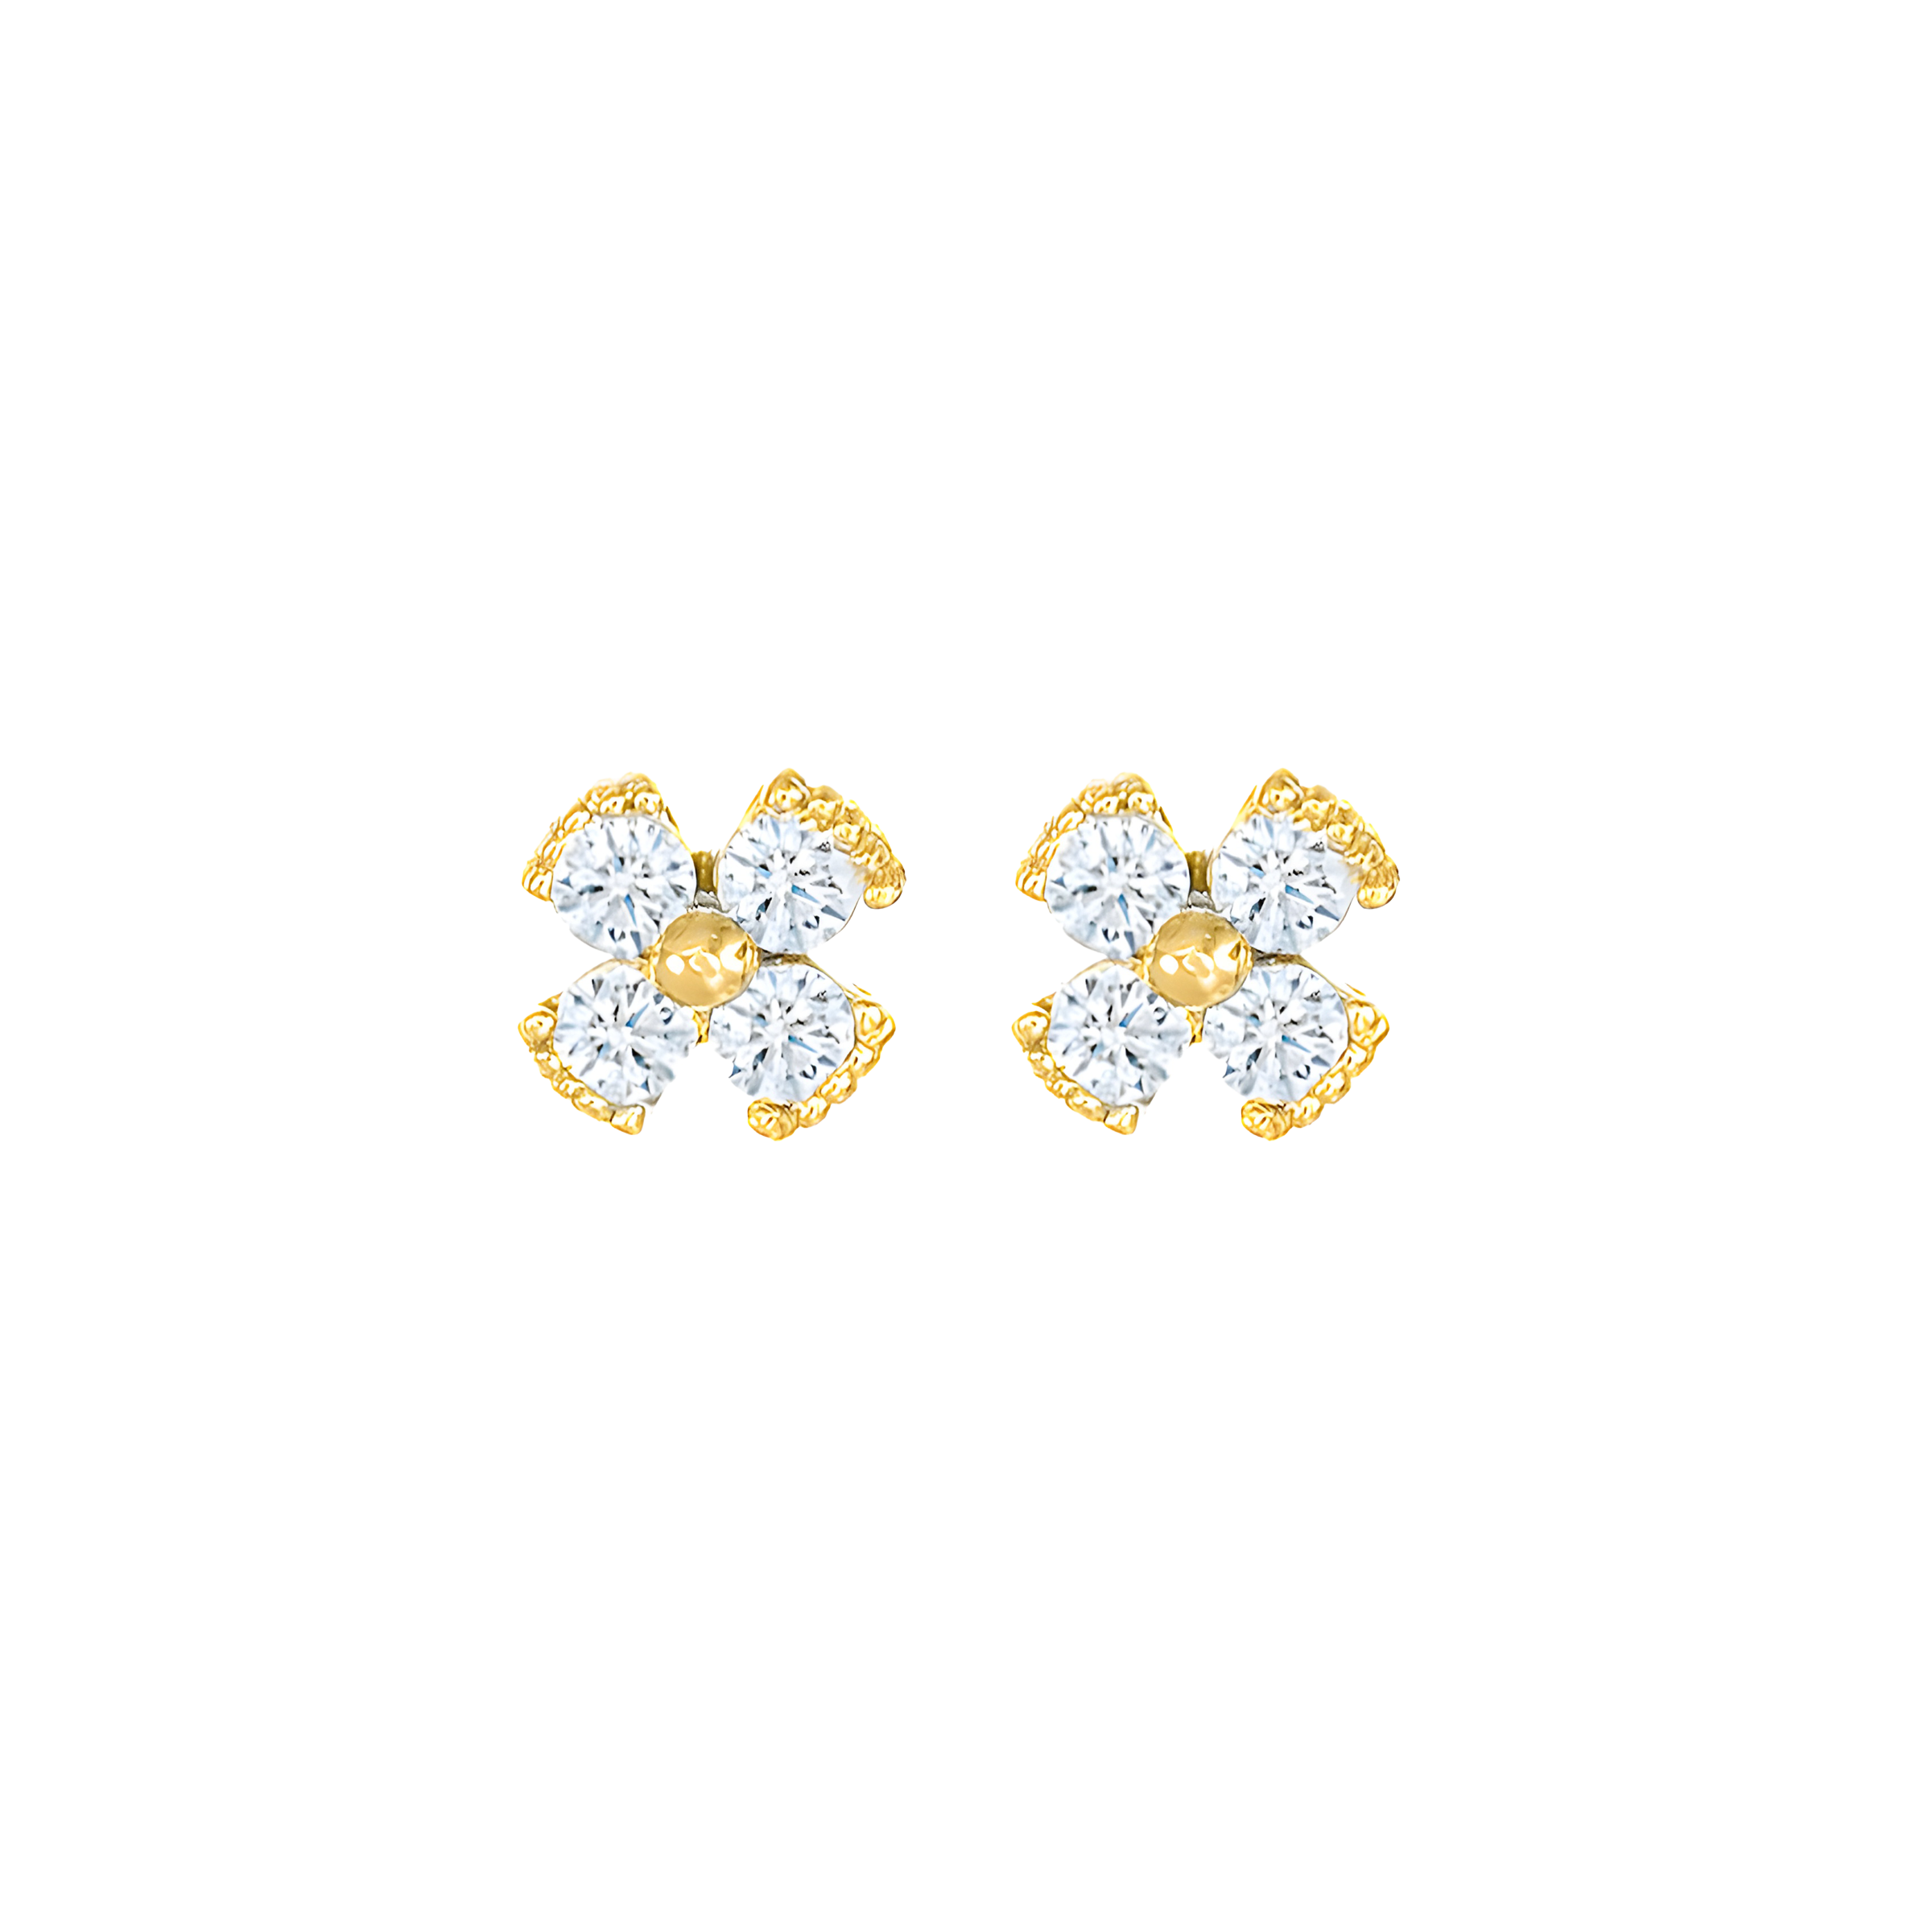 Dainty Floral White Topaz Stud Earrings in 18K Yellow Gold